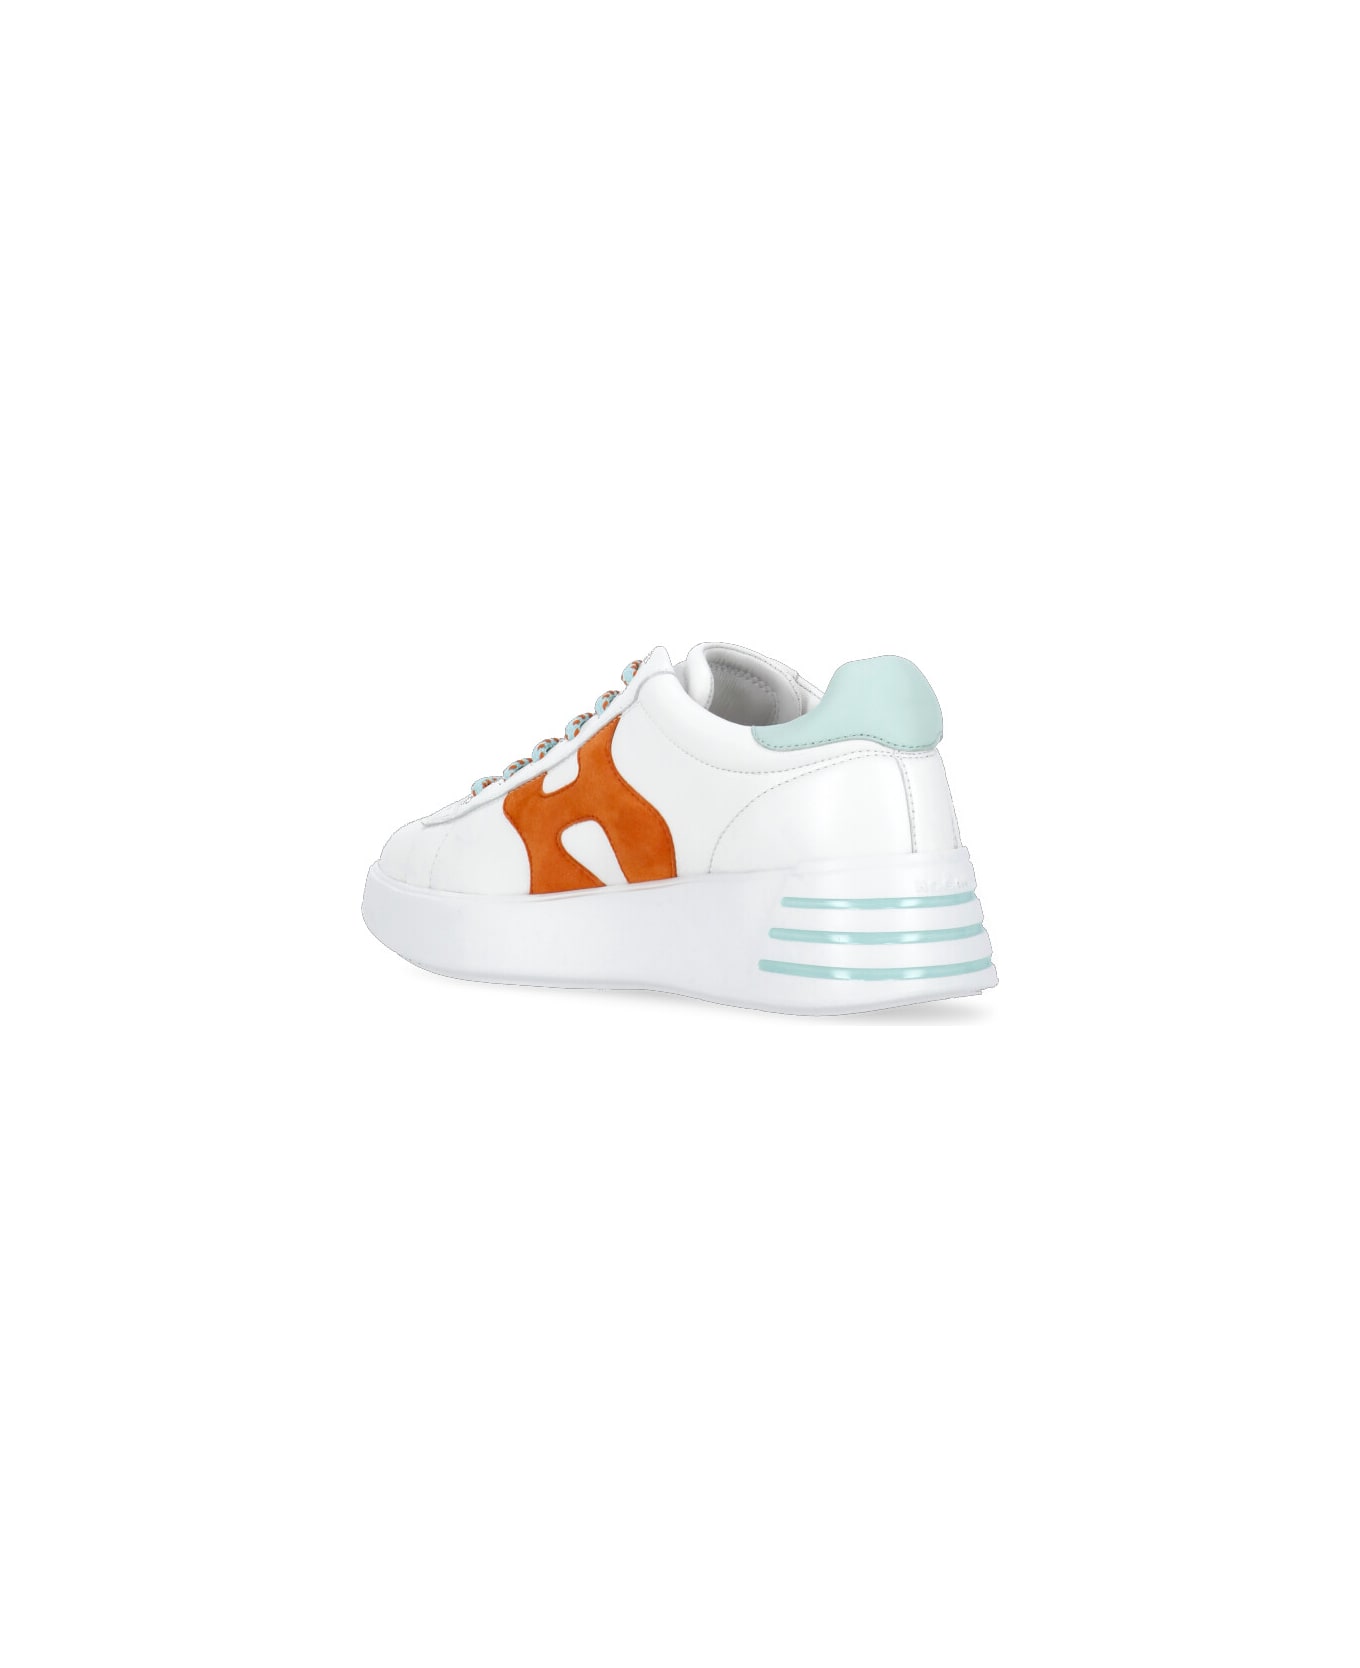 Hogan Rebel H564 Sneakers - White/light Blue/orange